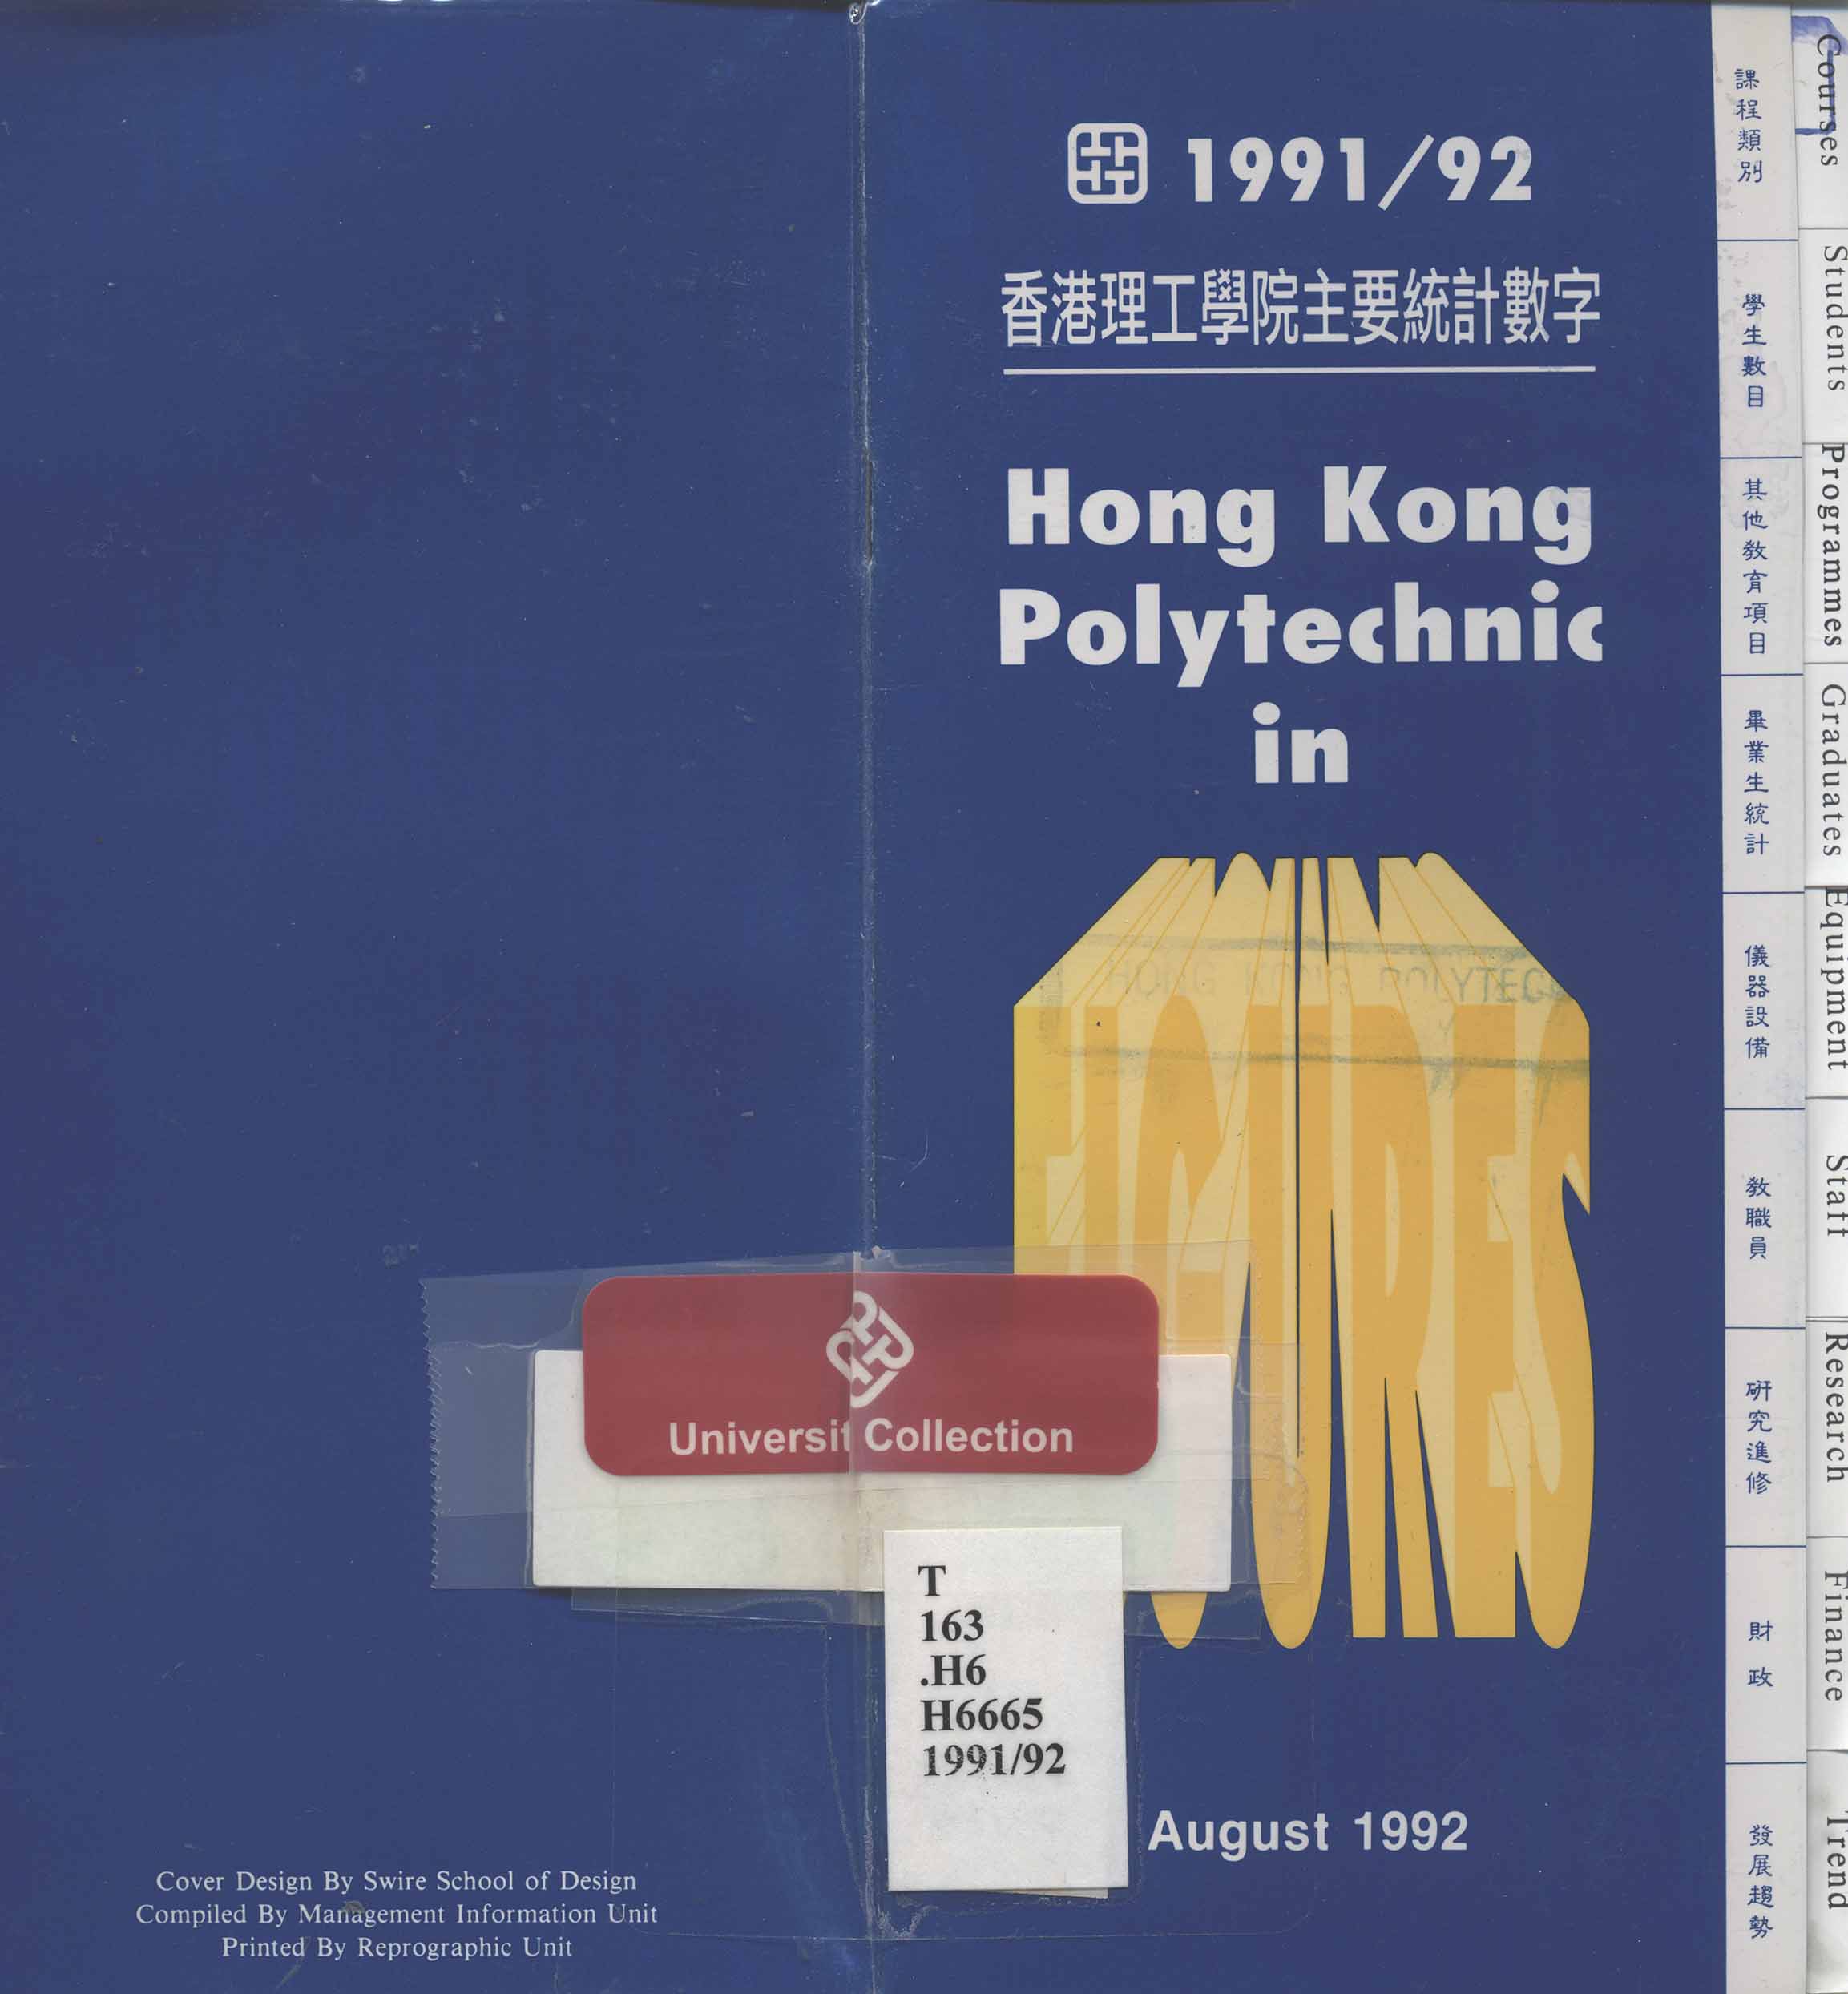 Hong Kong Polytechnic in figures 1991/92